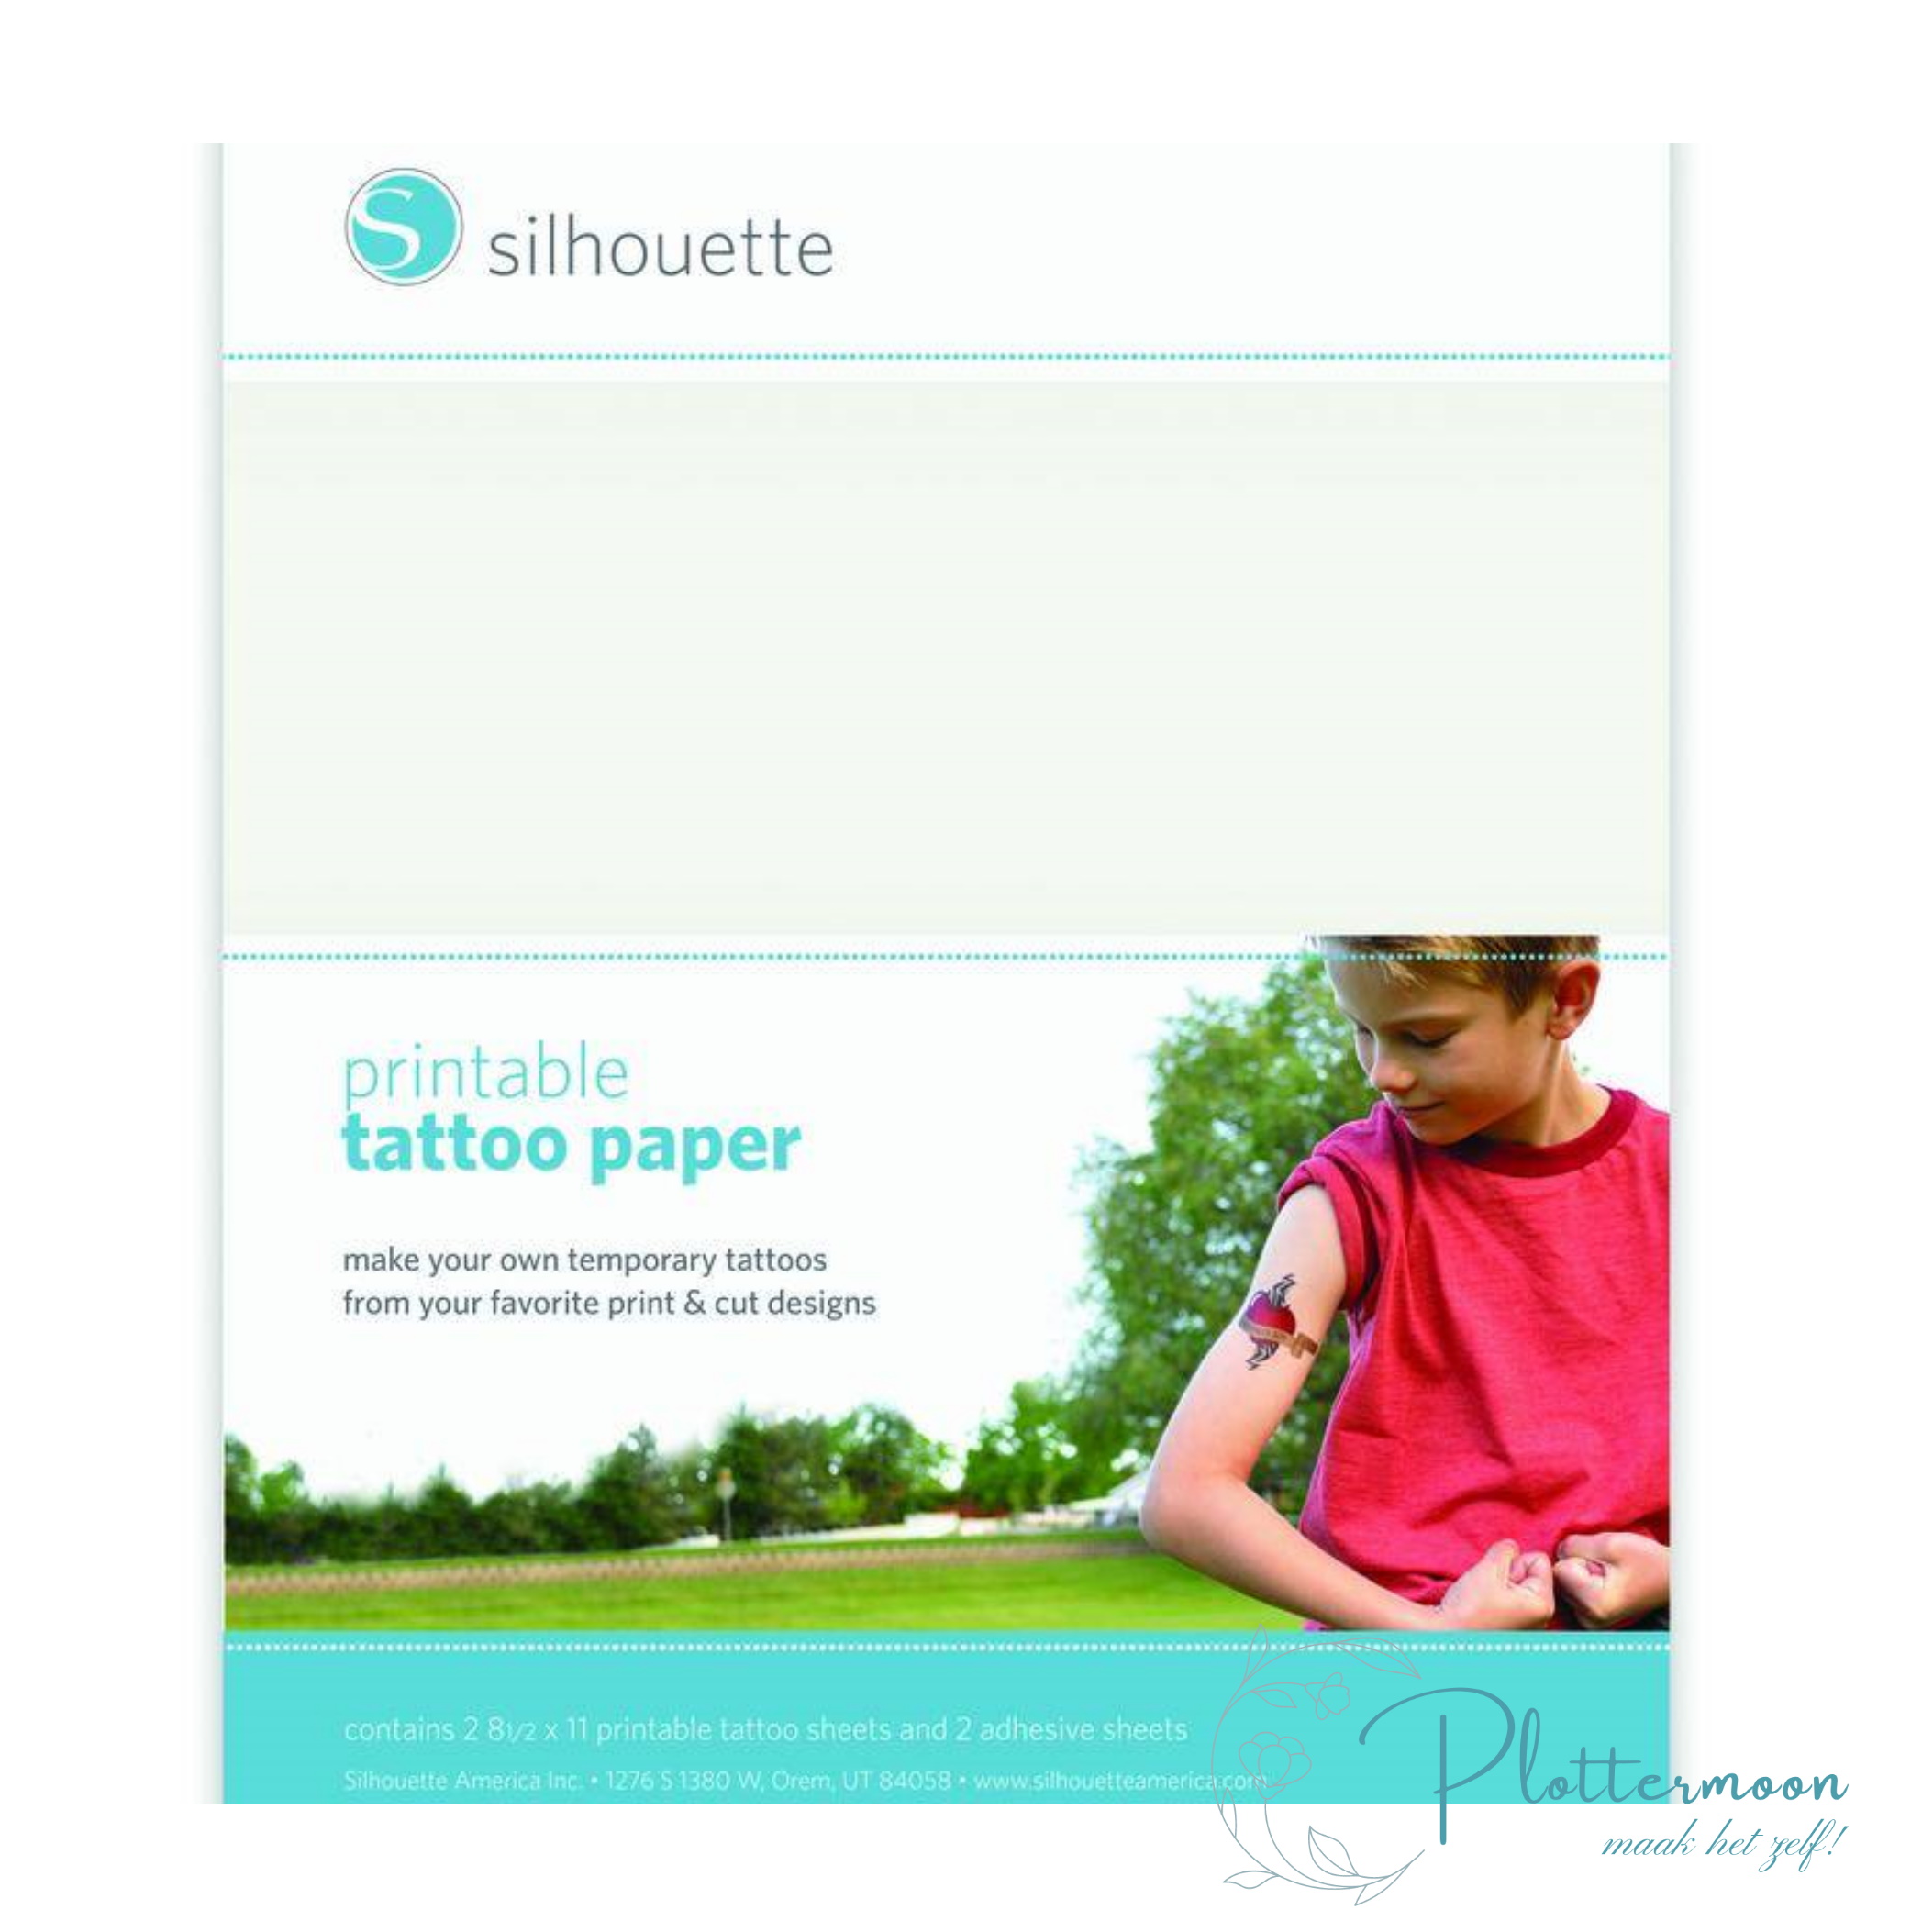 Kiezen jukbeen De daadwerkelijke Silhouette printbare tijdelijke tattoo papier transparant - Plottermoon